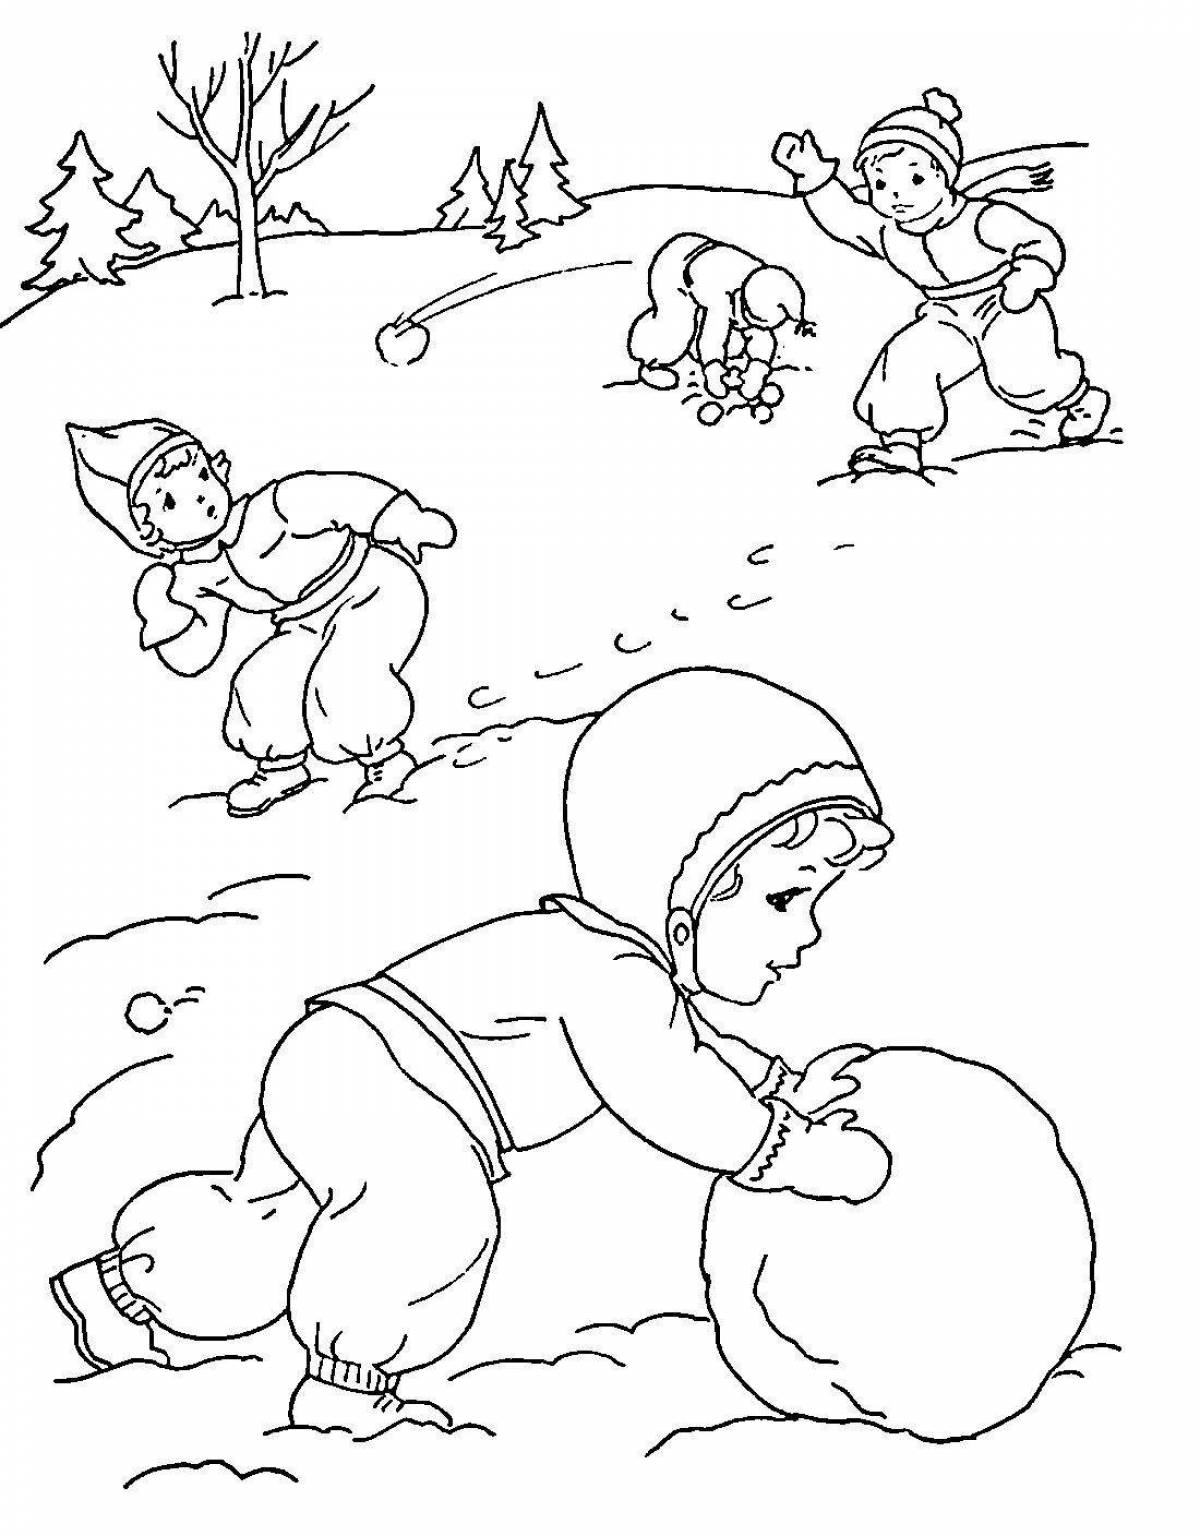 Children playing in winter #5